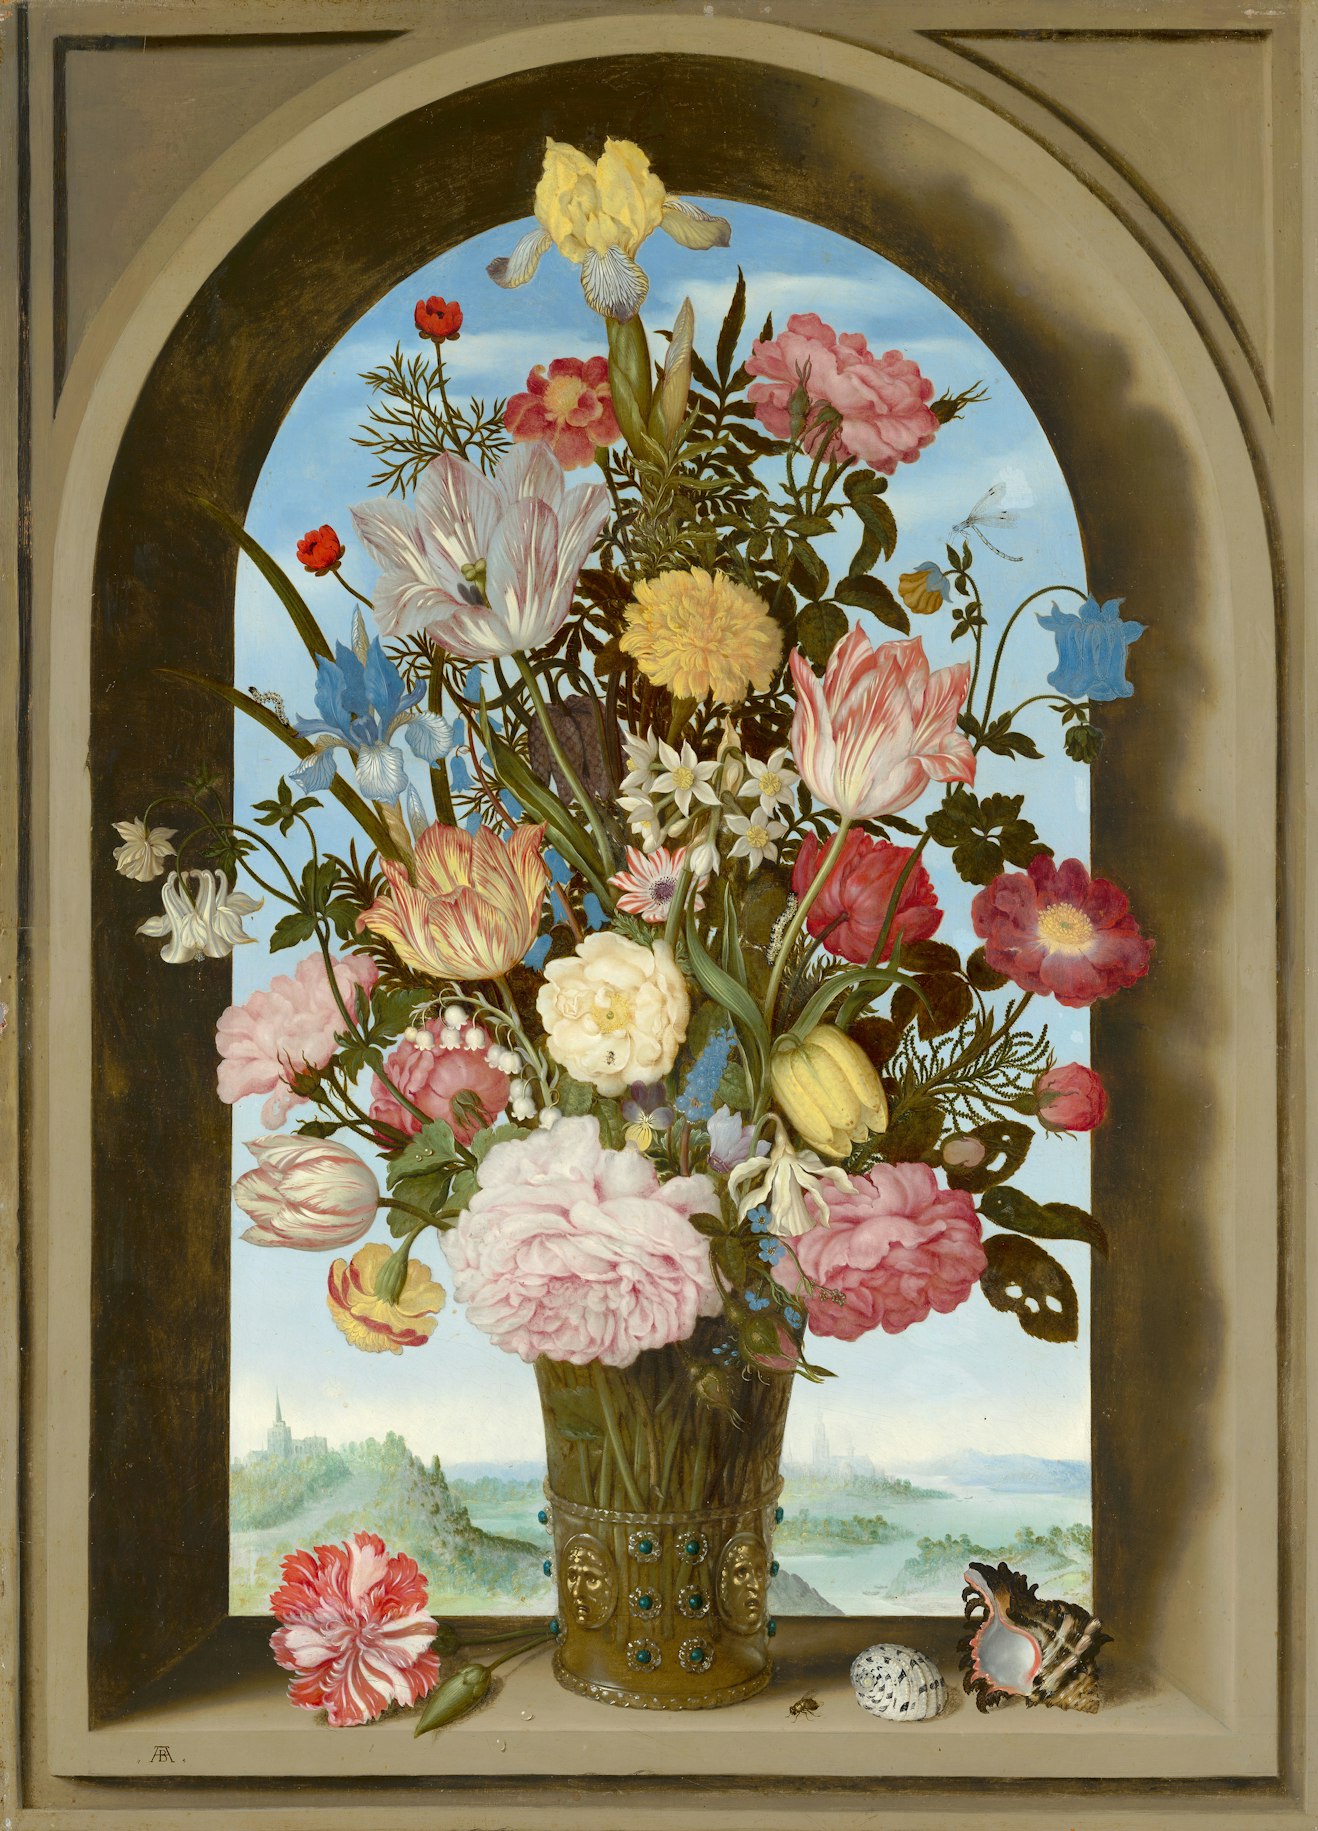 Vase of Flowers in a Window by Ambrosius Bosschaert the Elder